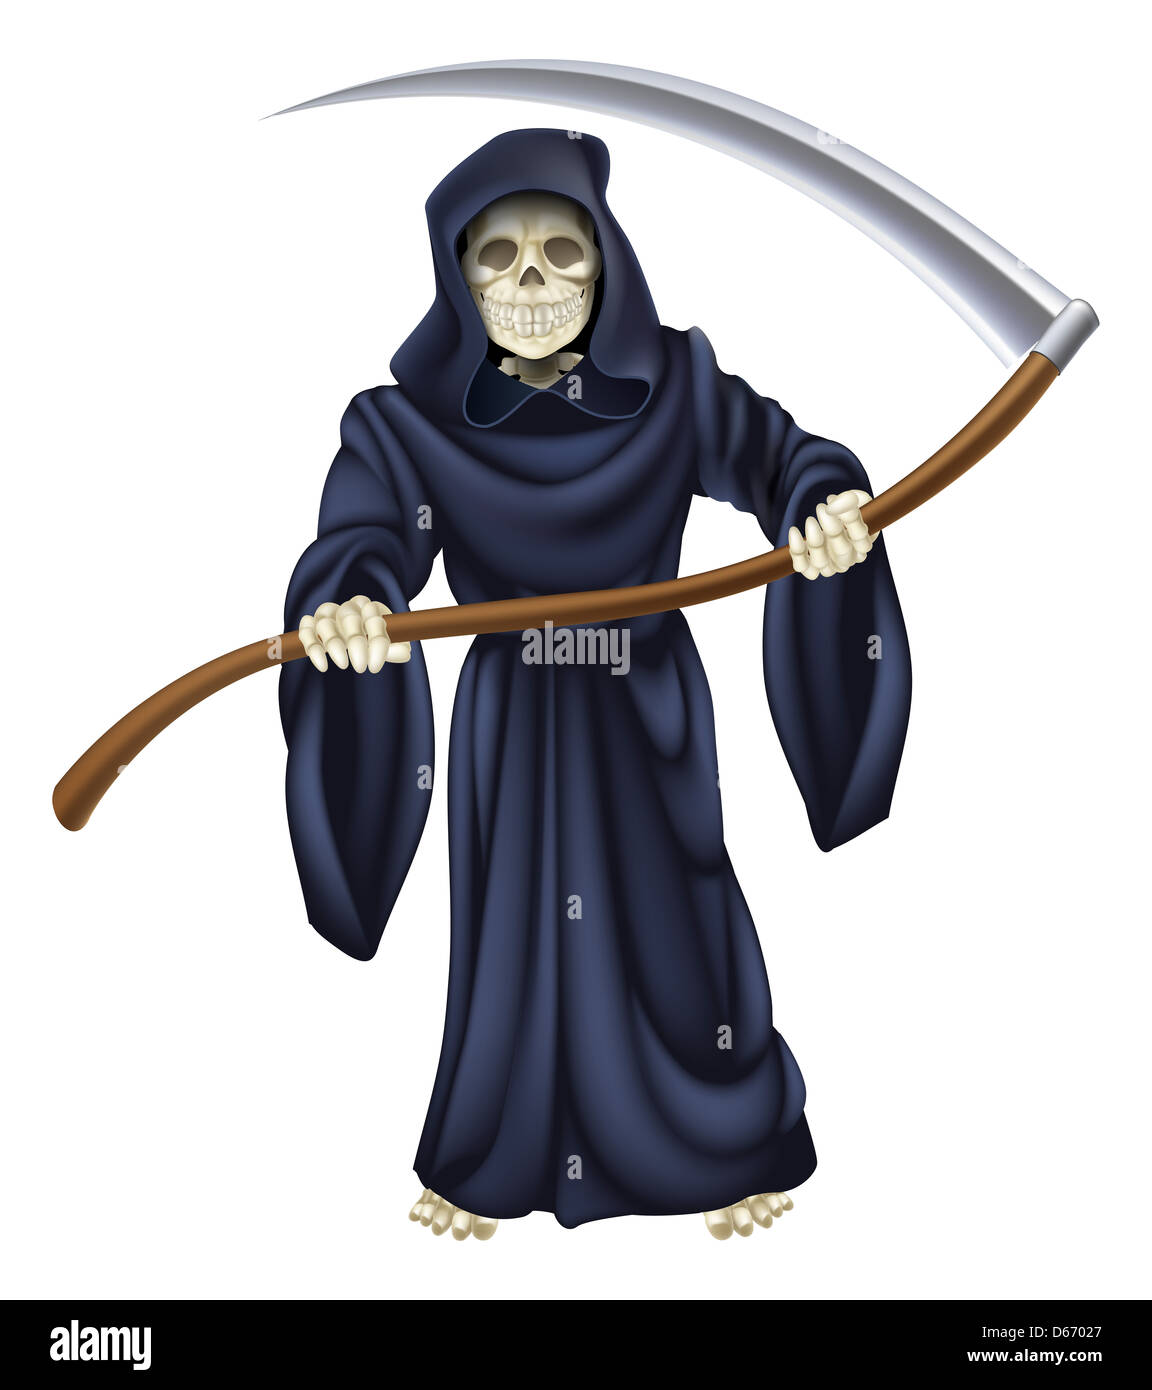 https://c8.alamy.com/comp/D67027/an-illustration-of-a-grim-reaper-death-character-holding-a-scythe-D67027.jpg